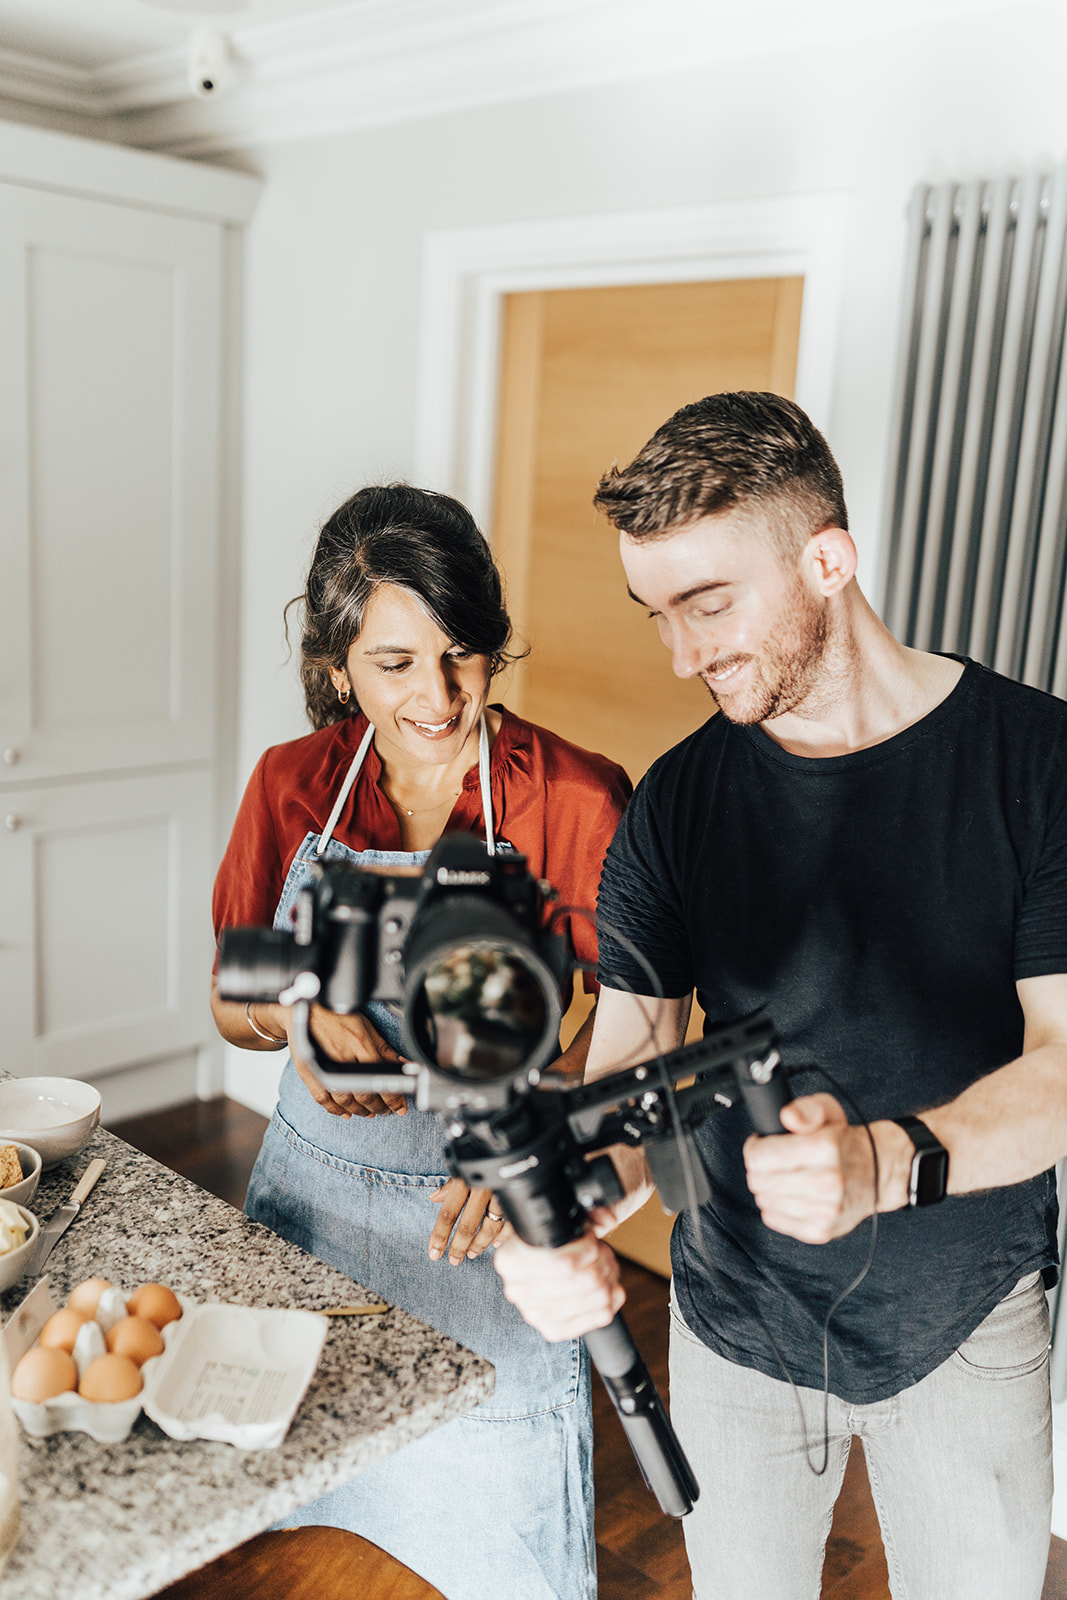  Behind the scenes filming branding video for Sugar Plum Bakes | Rebecca Carpenter